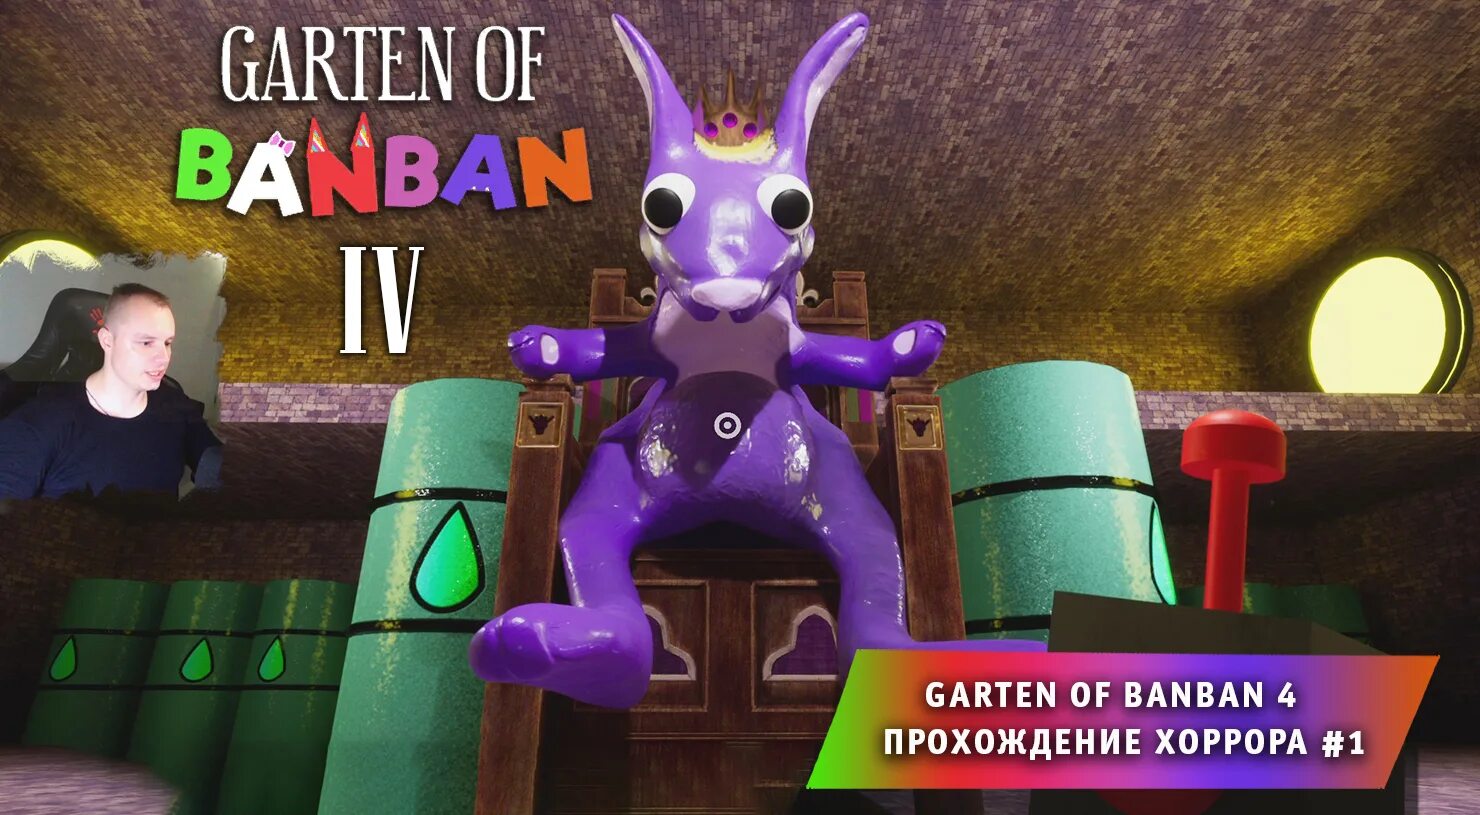 Гартен банбан 4. Банбан 4. Garden of ban ban 4. Гарден оф Банбан Банбан. Garden of Banban игра.